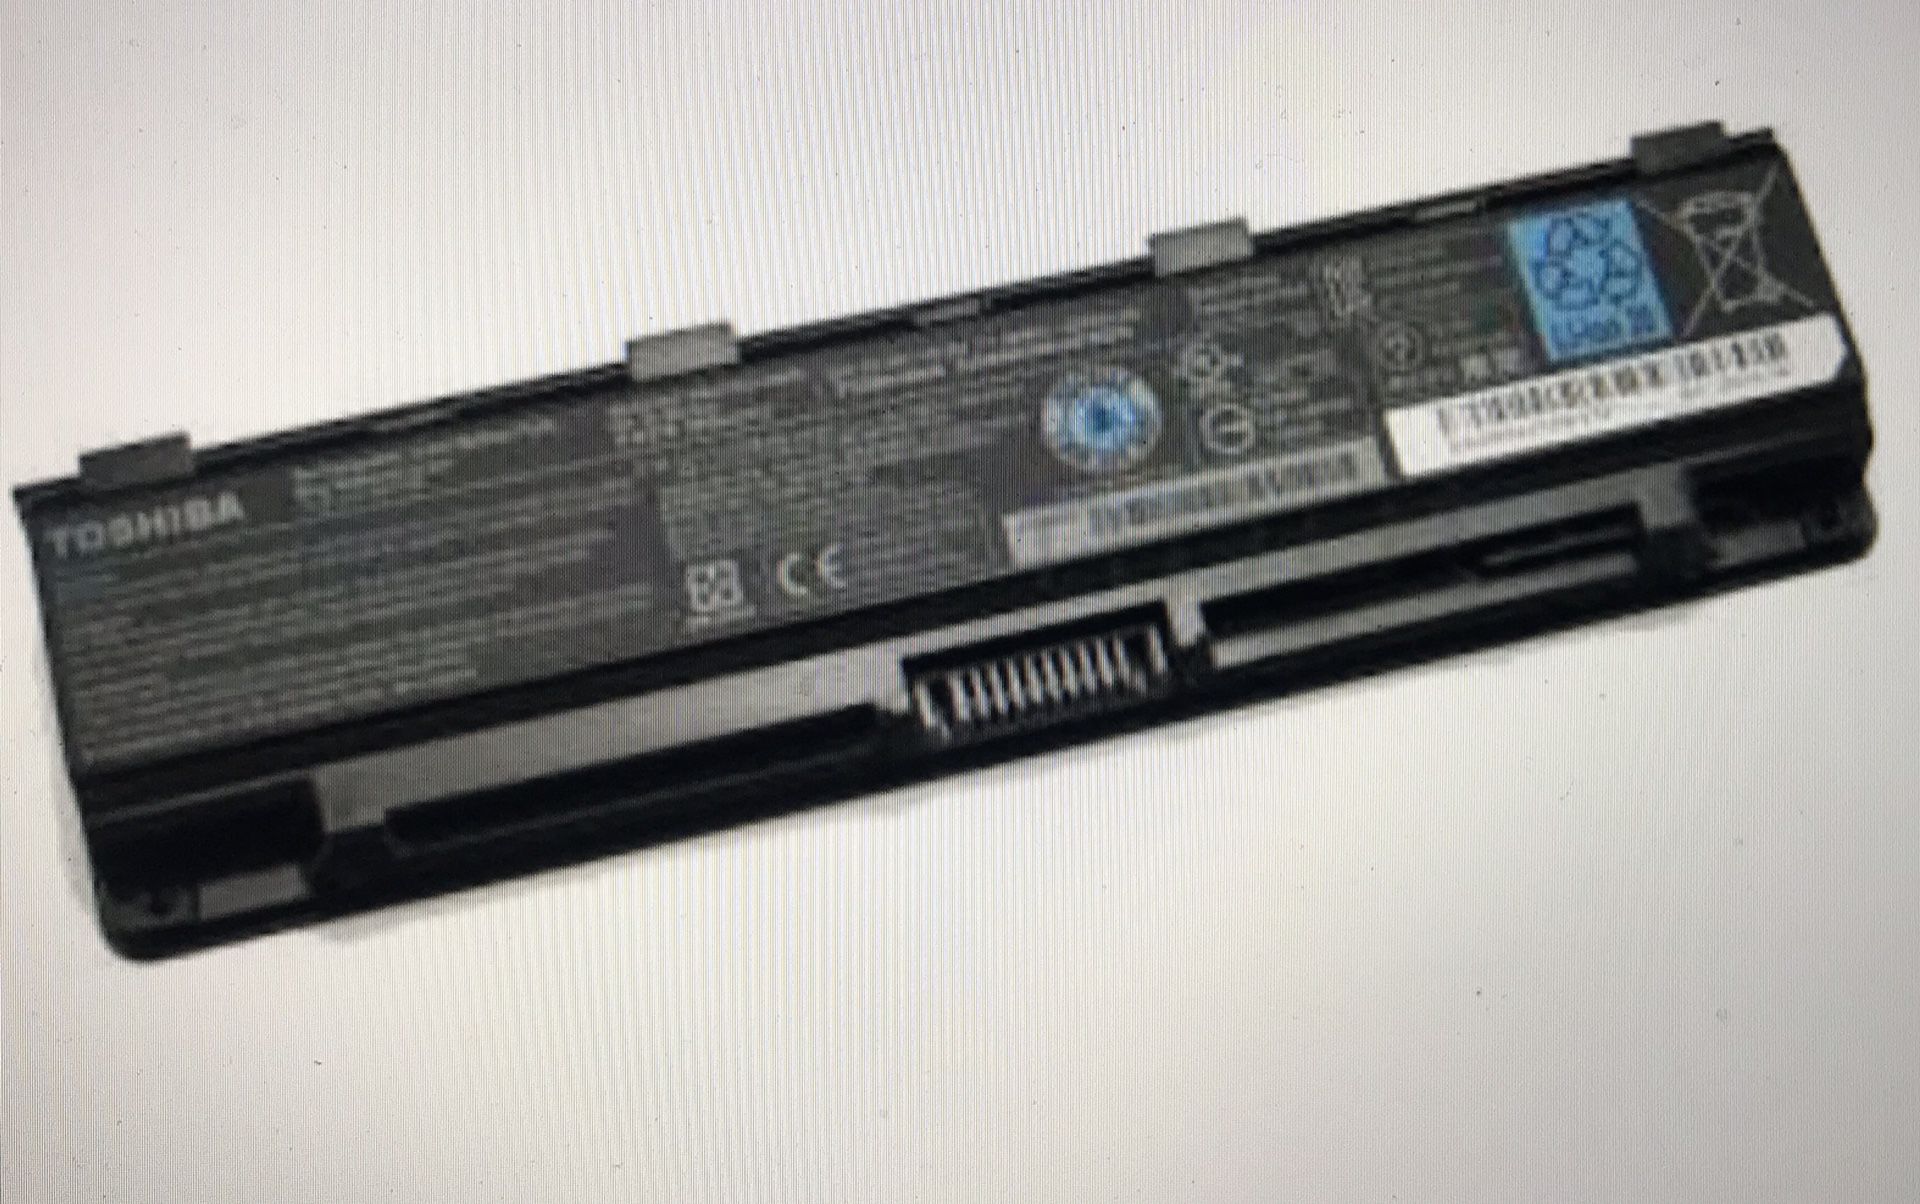 Toshiba original 48Wh battery pack.